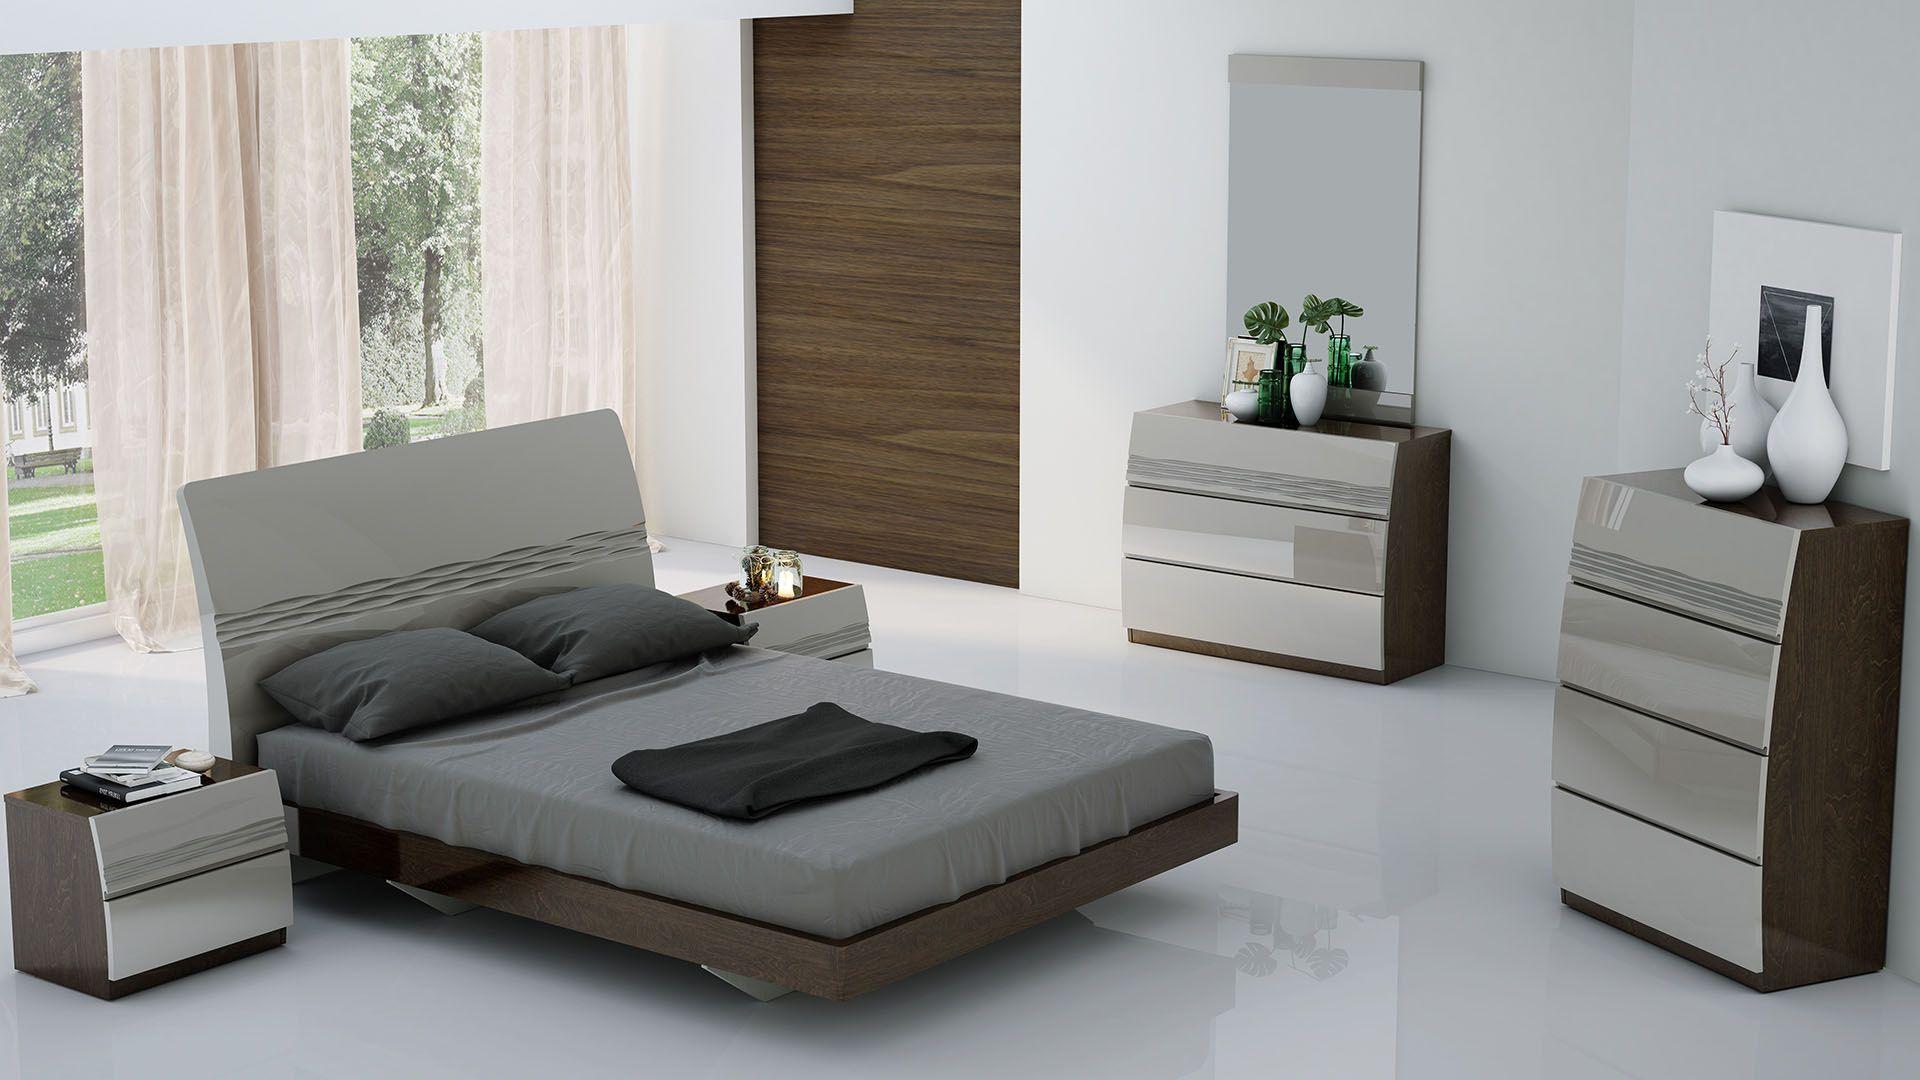 

    
American Eagle Furniture ED-P102 Bachelor Chest Light Gray/Brown ED-P102
